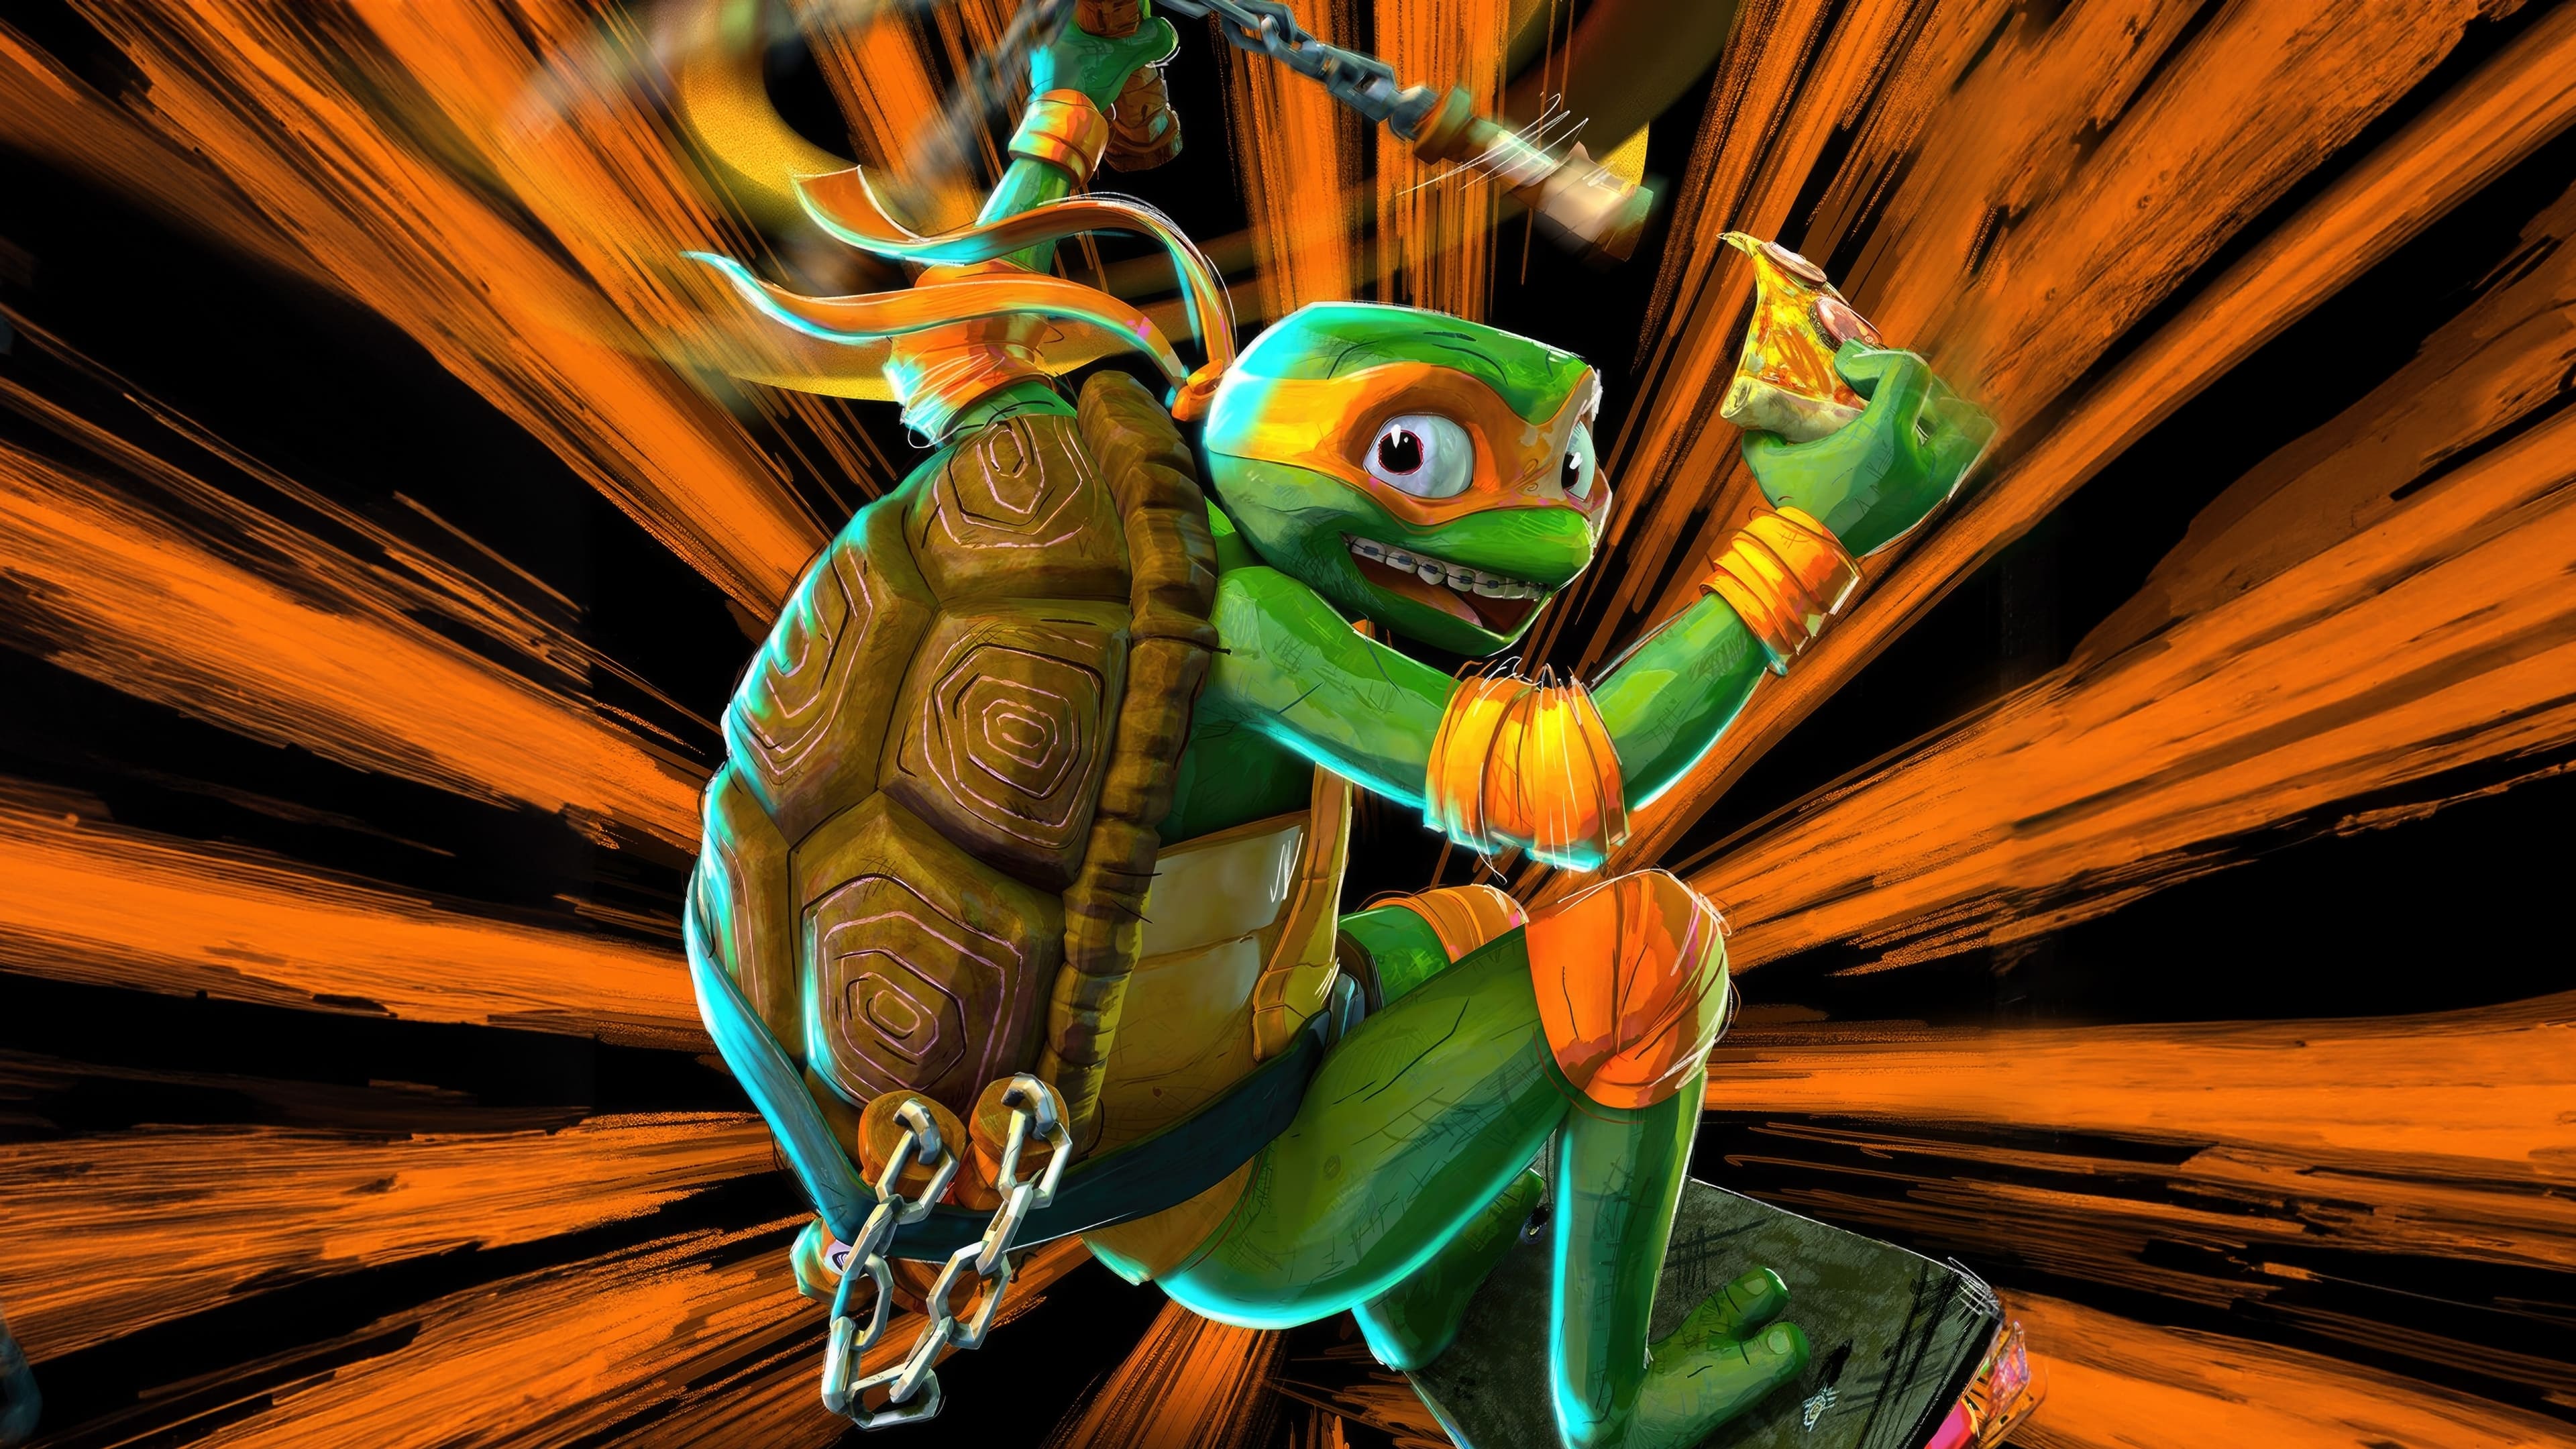 Țestoasele Ninja: Haosul Mutanților (2023)